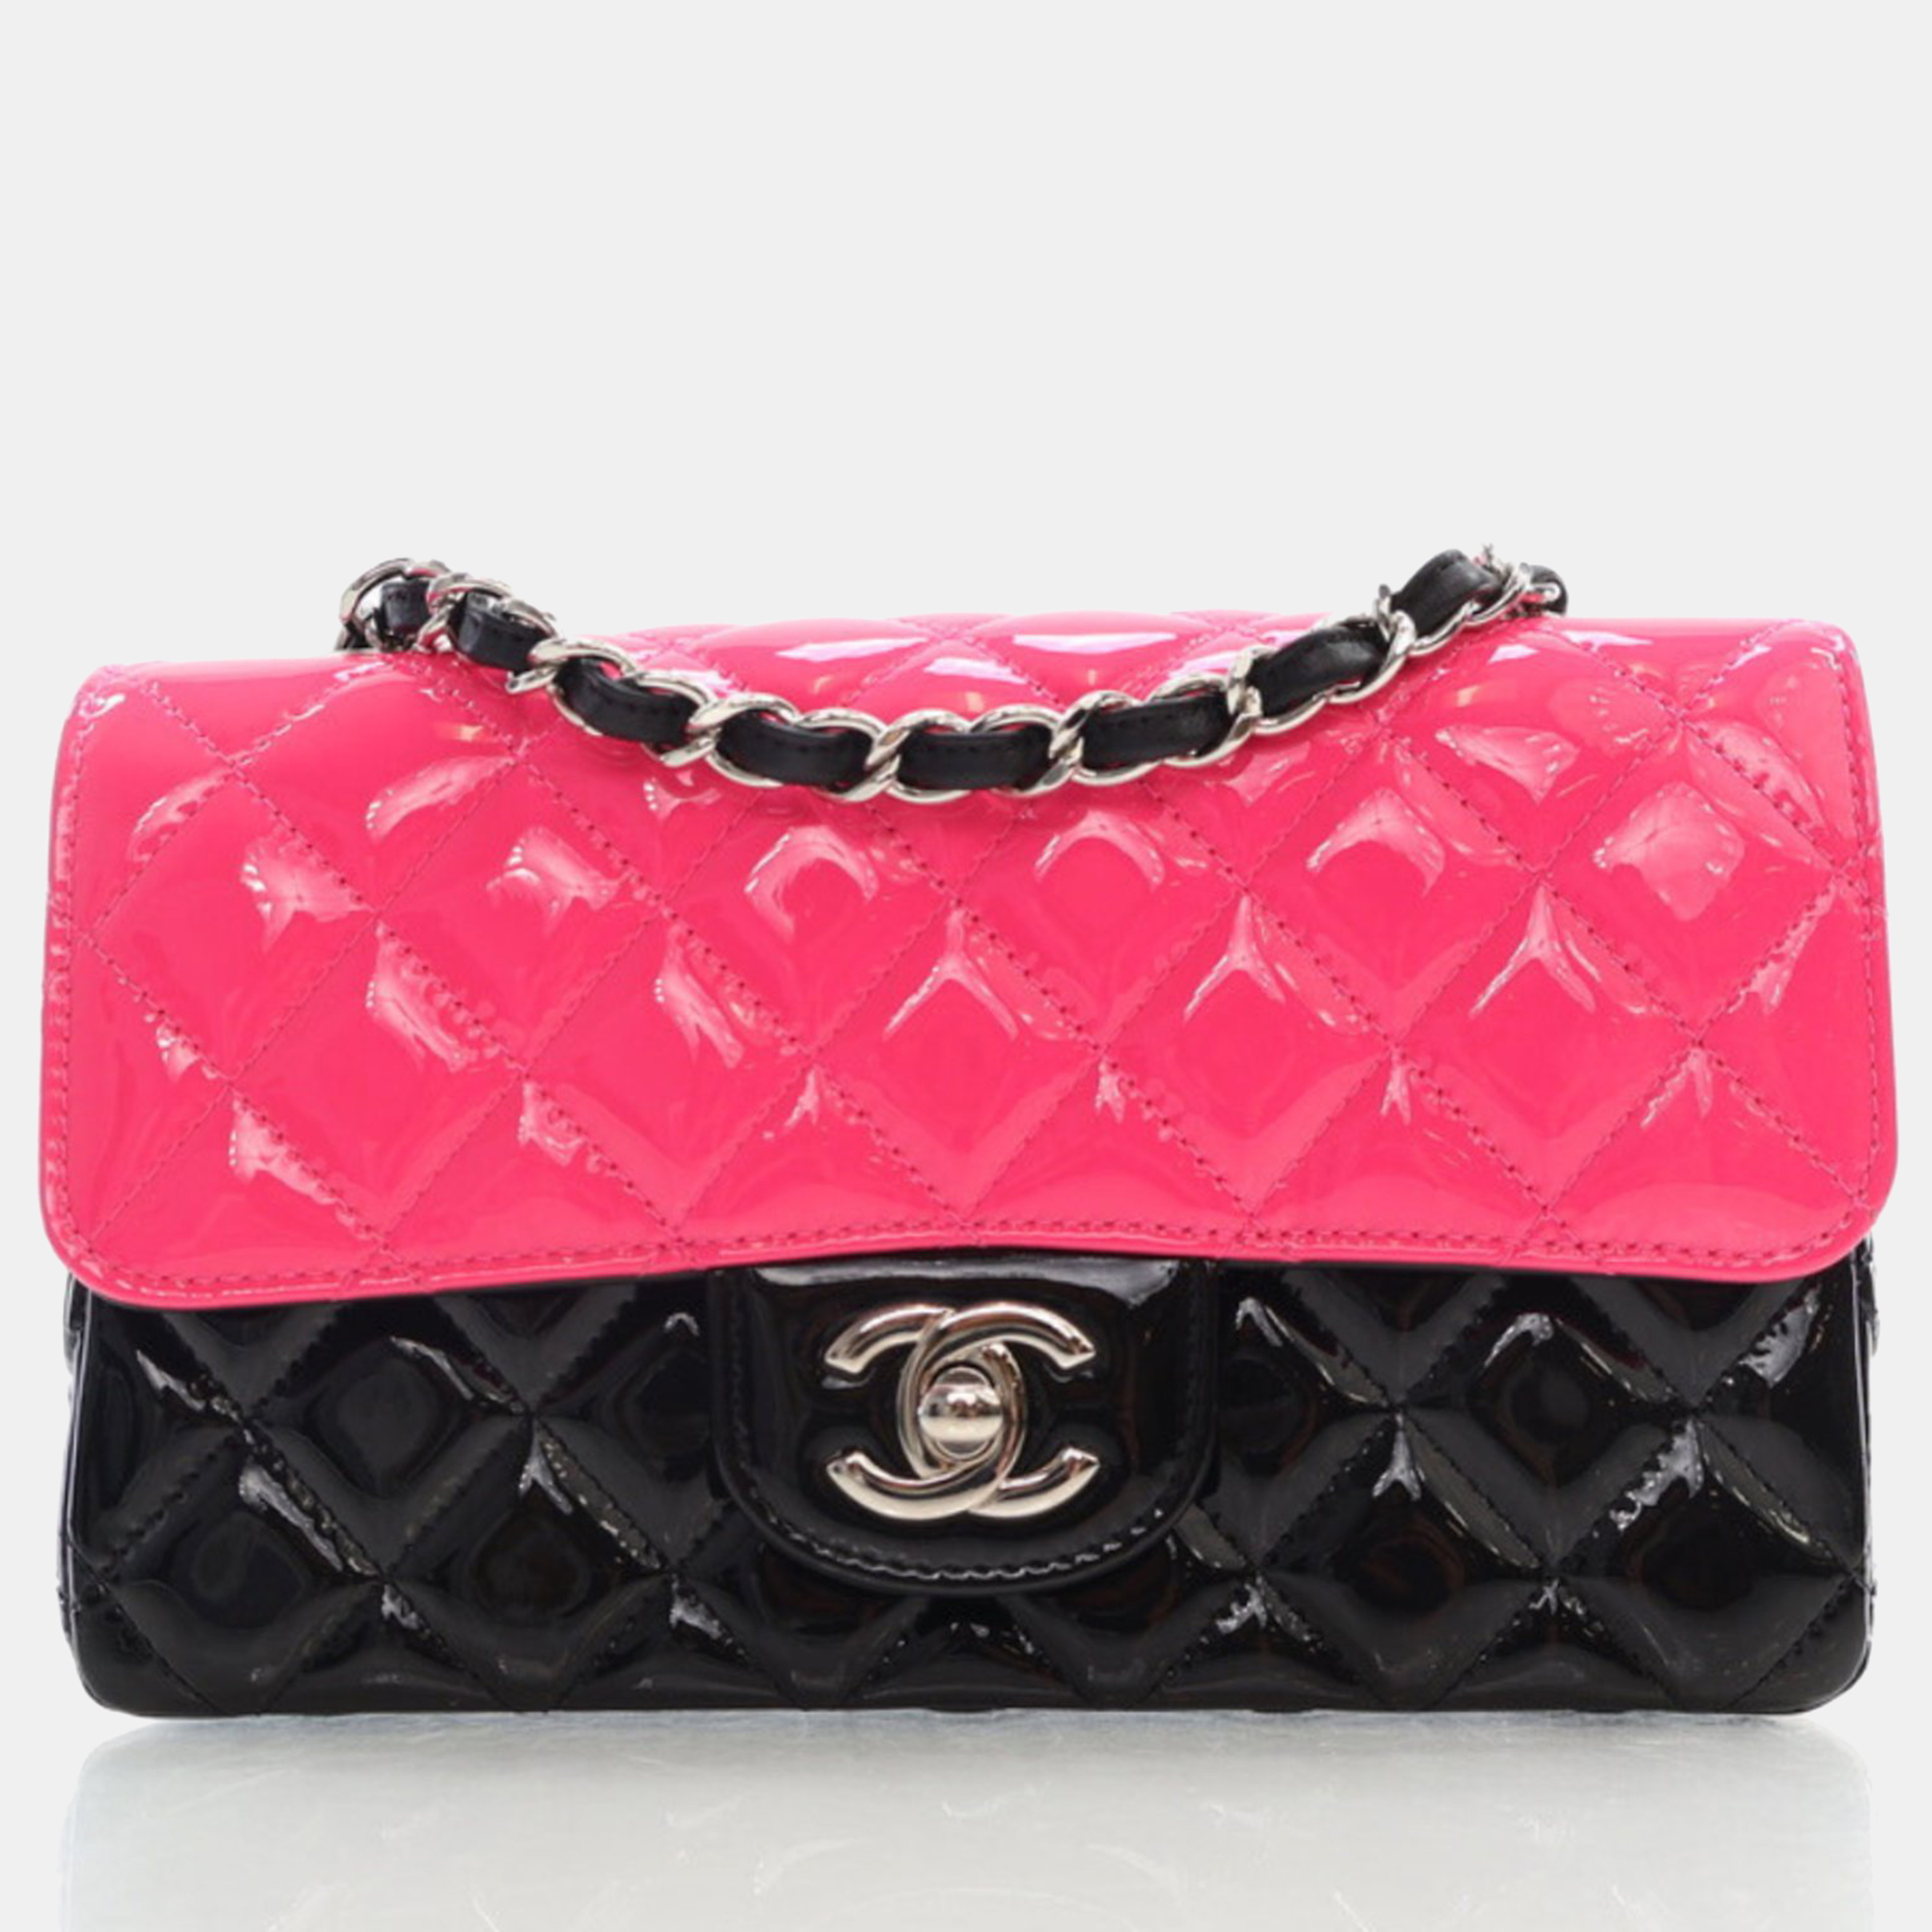 Chanel pink/black patent calfskin quilted bi-color mini rectangular flap bag